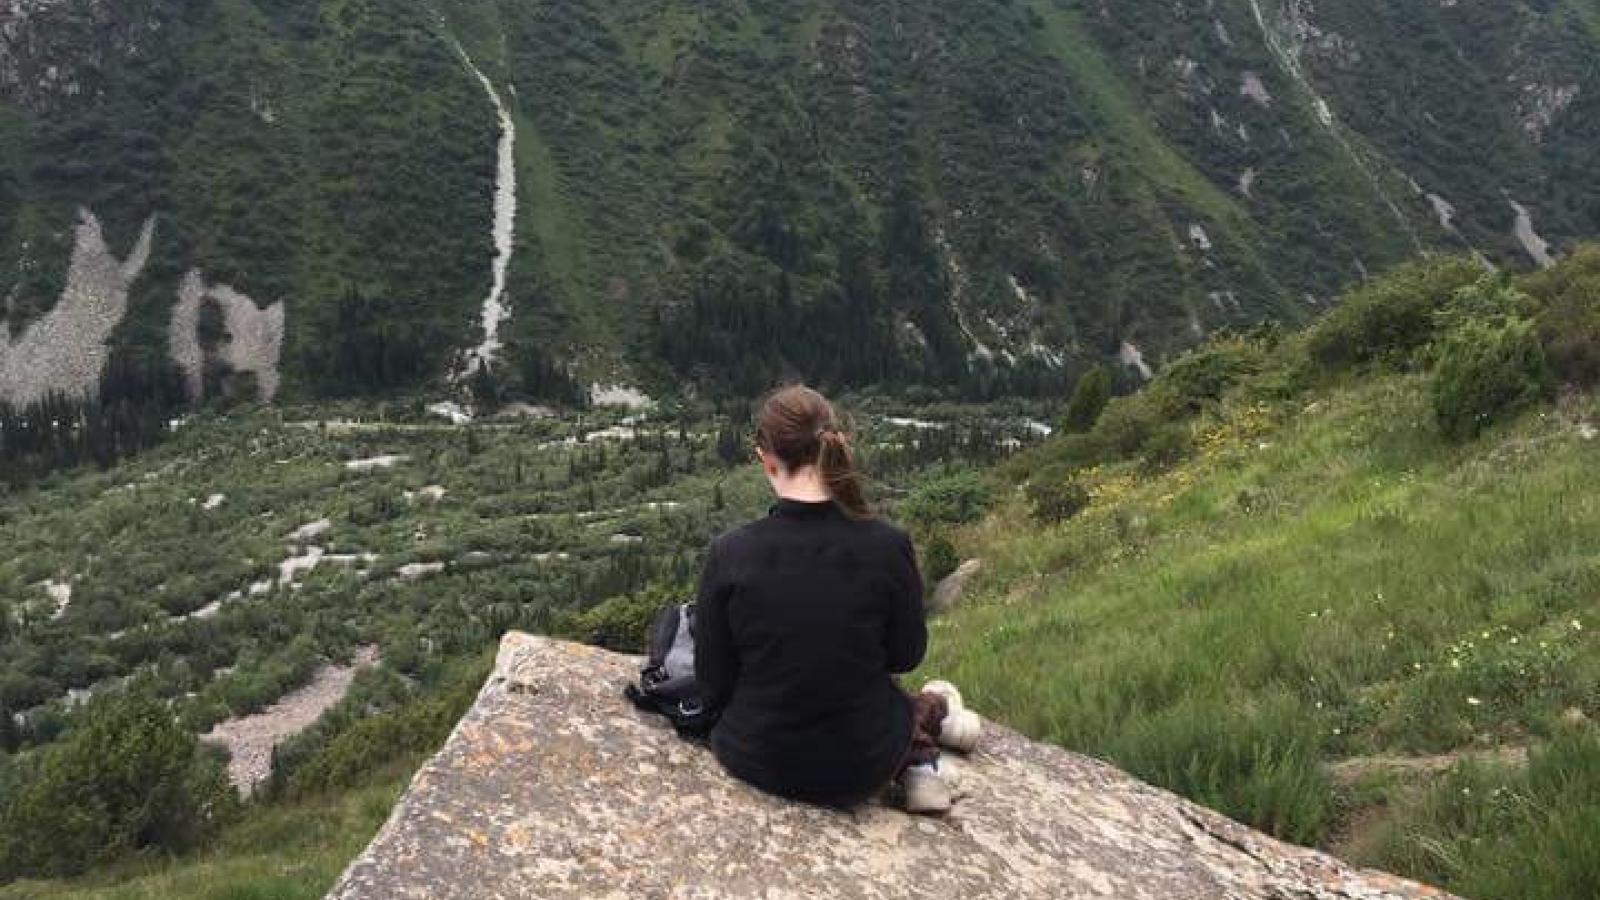 Amelia Smith enjoying the view off a mountain in Kyrgyzstan